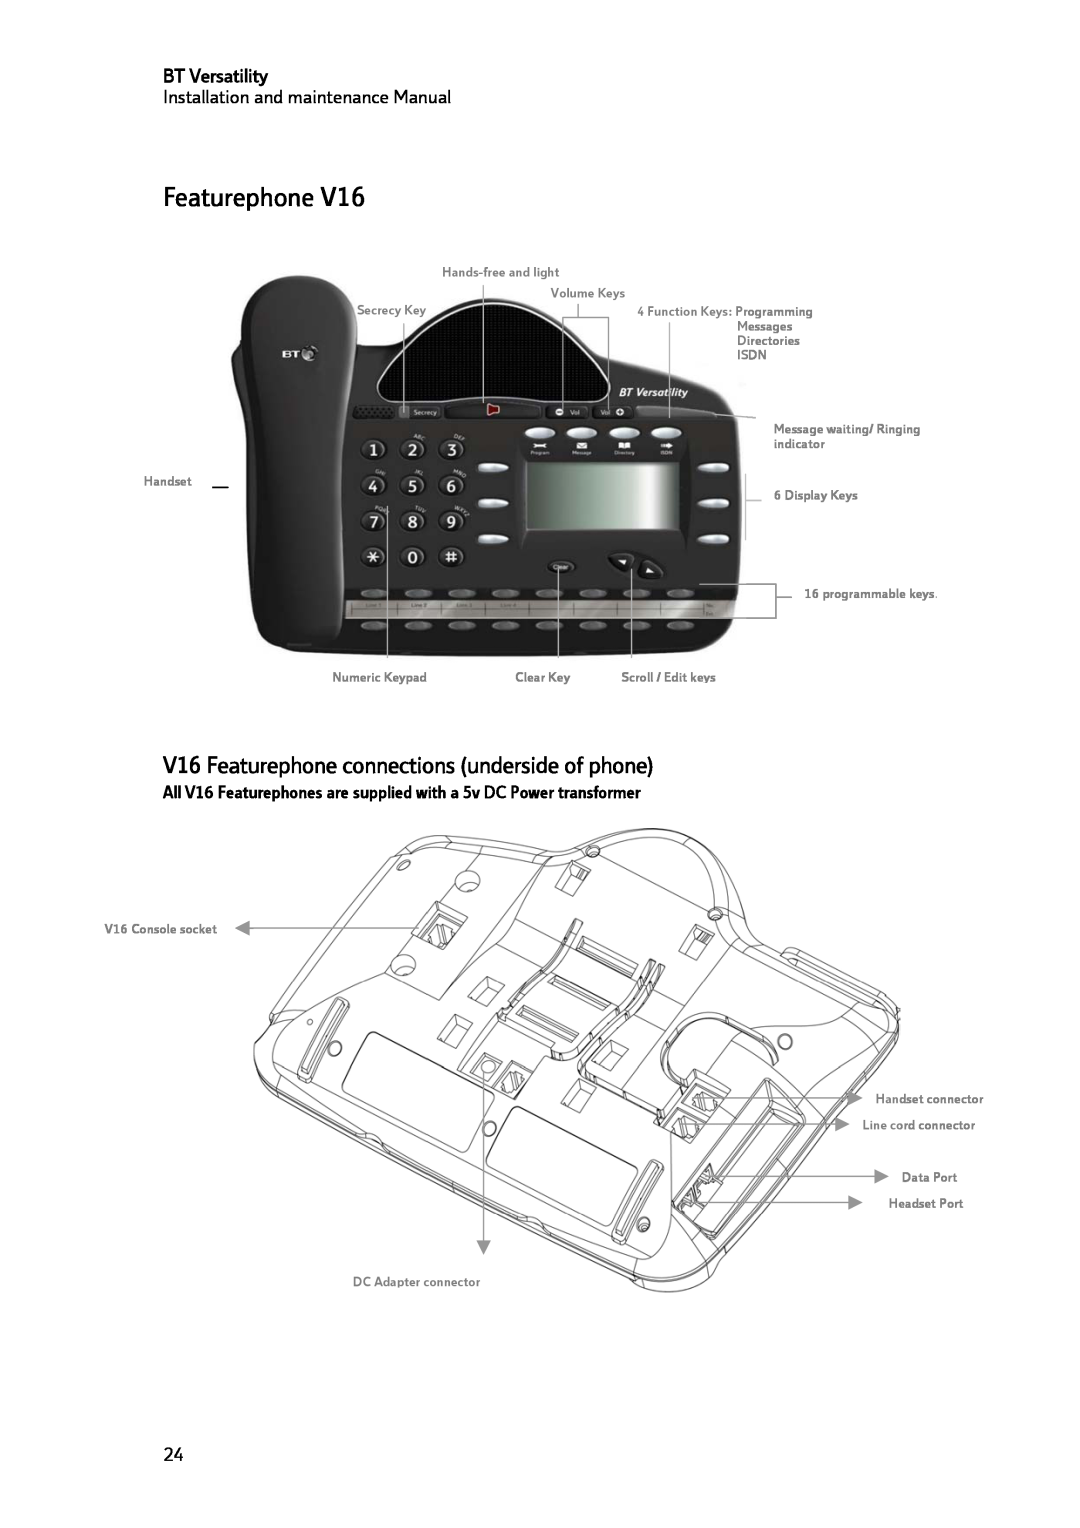 BT BT Versatility manual V16 Featurephone connections underside of phone 